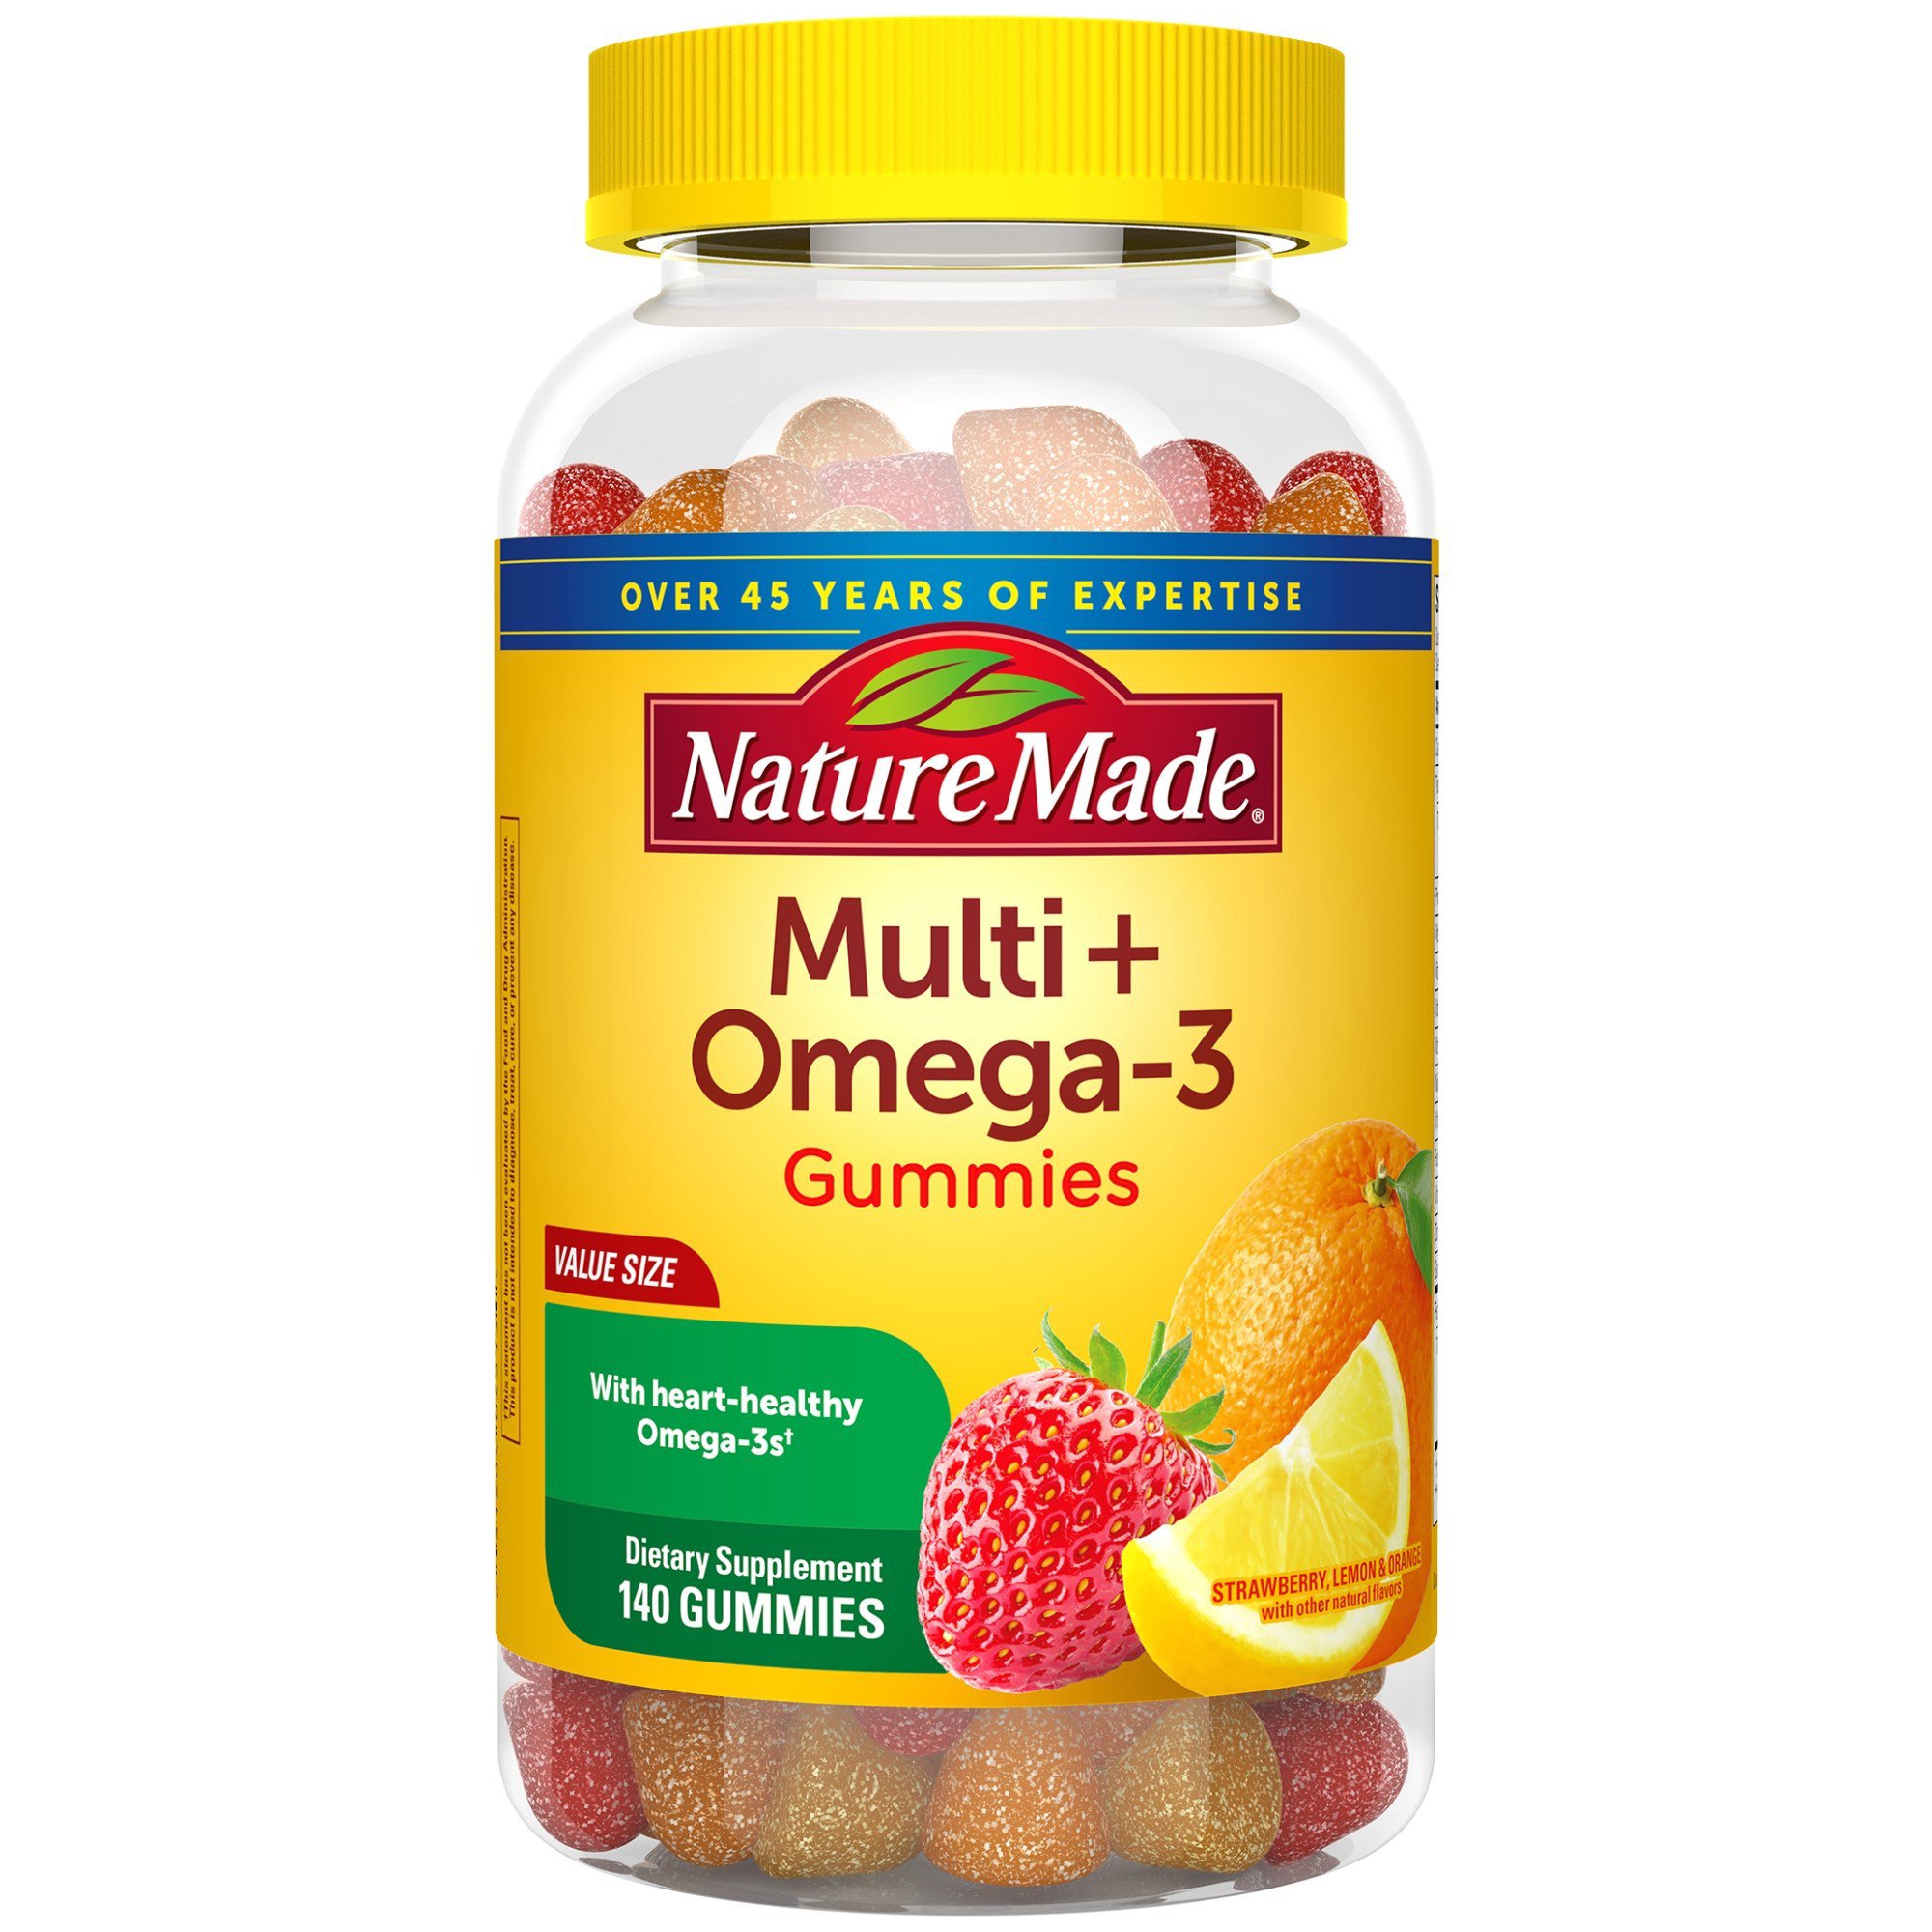 Nature Made Multi + Omega-3 Adult Gummies - Shop Multivitamins at H-E-B